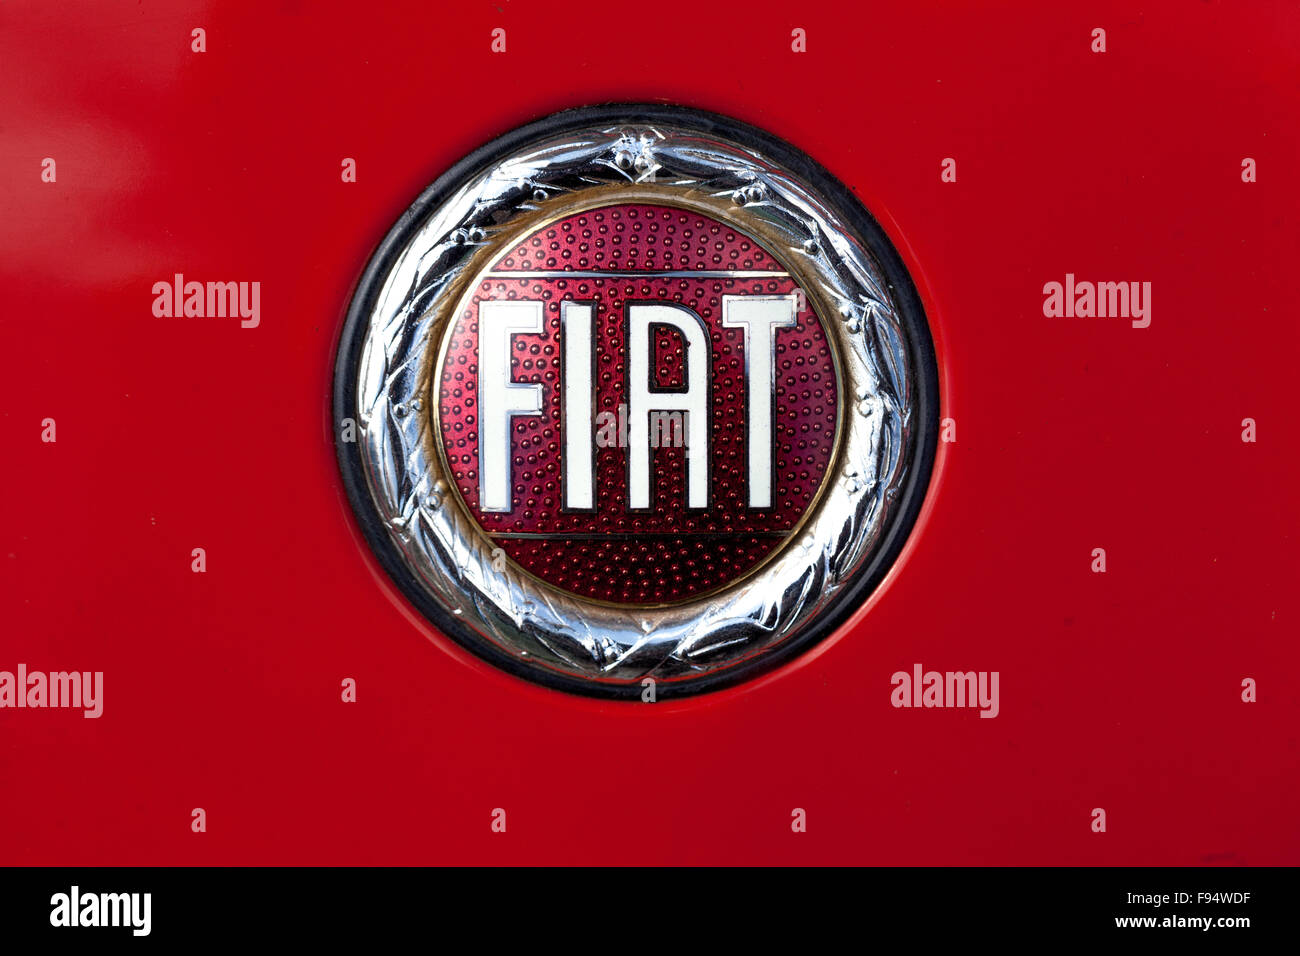 Older car Fiat logo Fiat sign Stock Photo